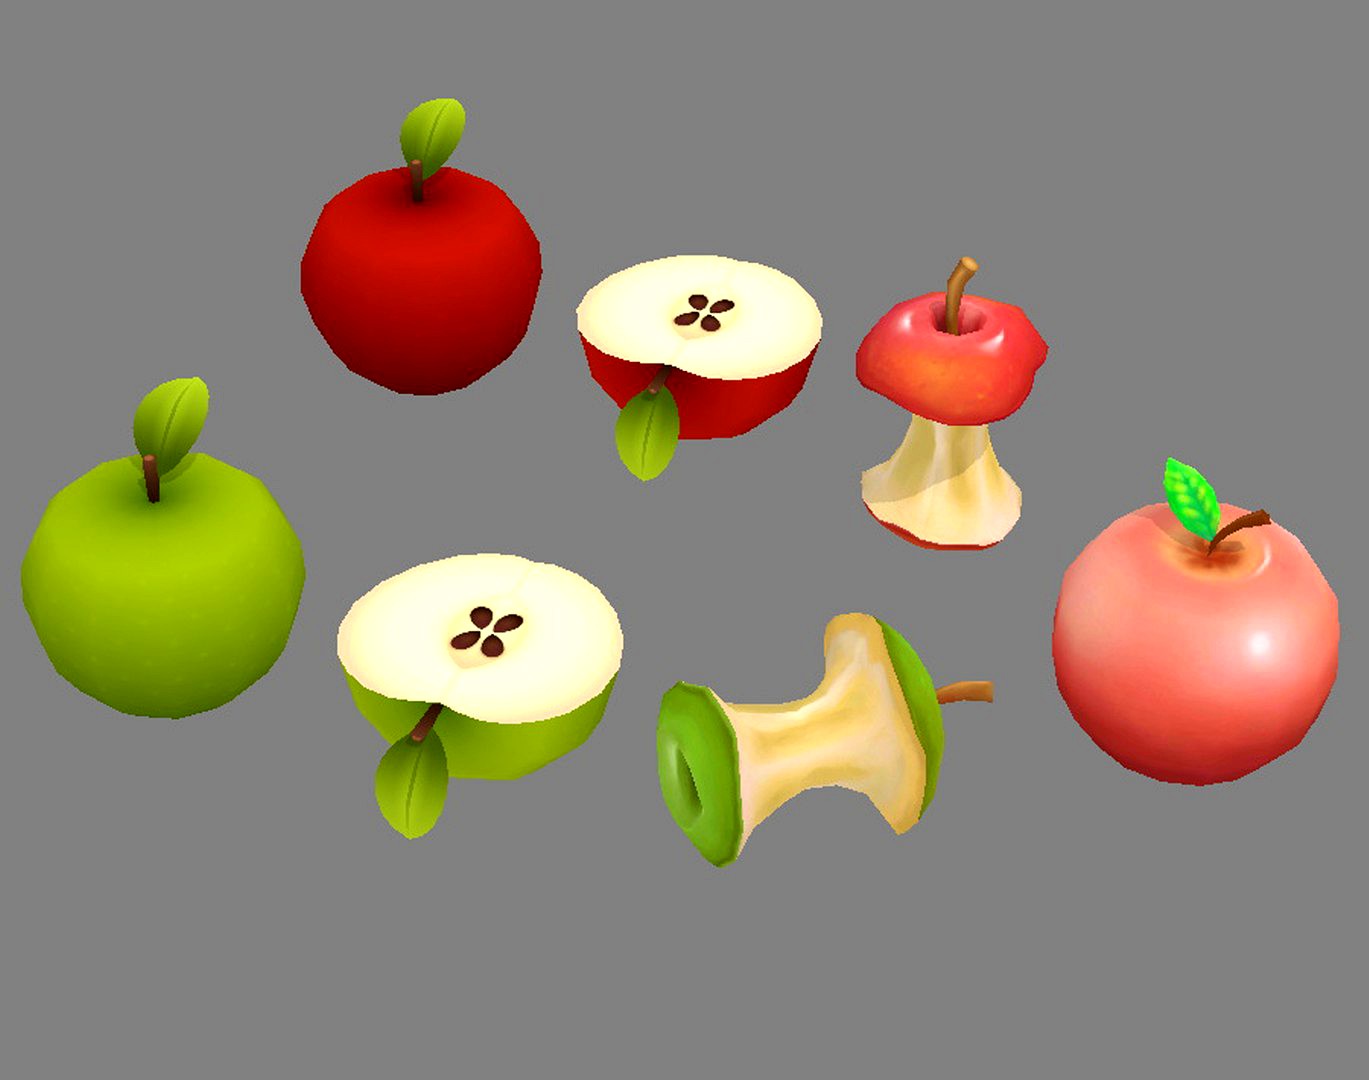 Cut apples - Apple core- Red apple - Green apple